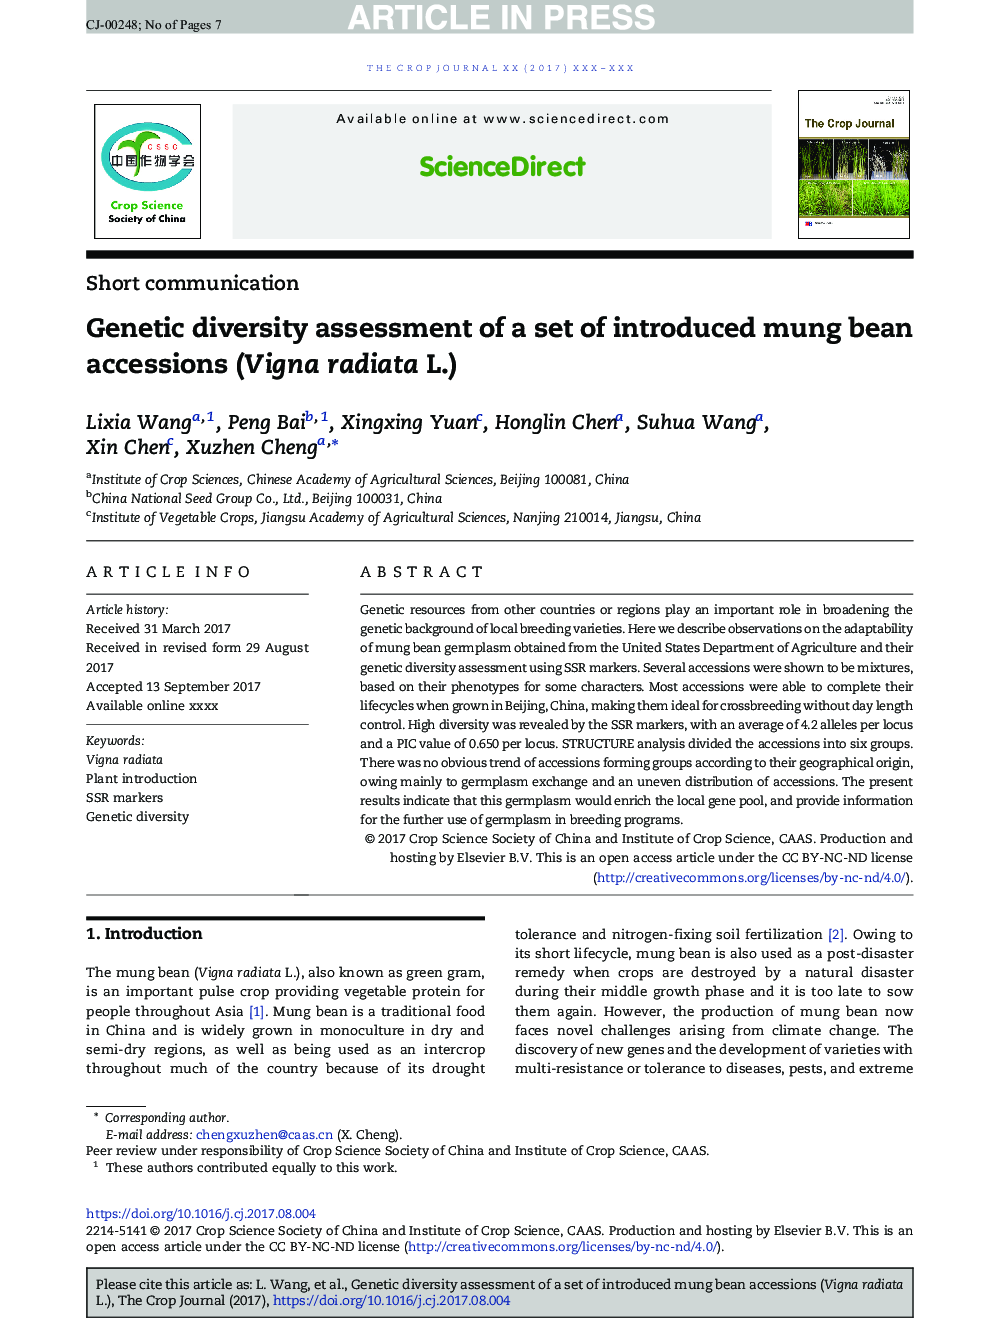 Genetic diversity assessment of a set of introduced mung bean accessions (Vigna radiata L.)